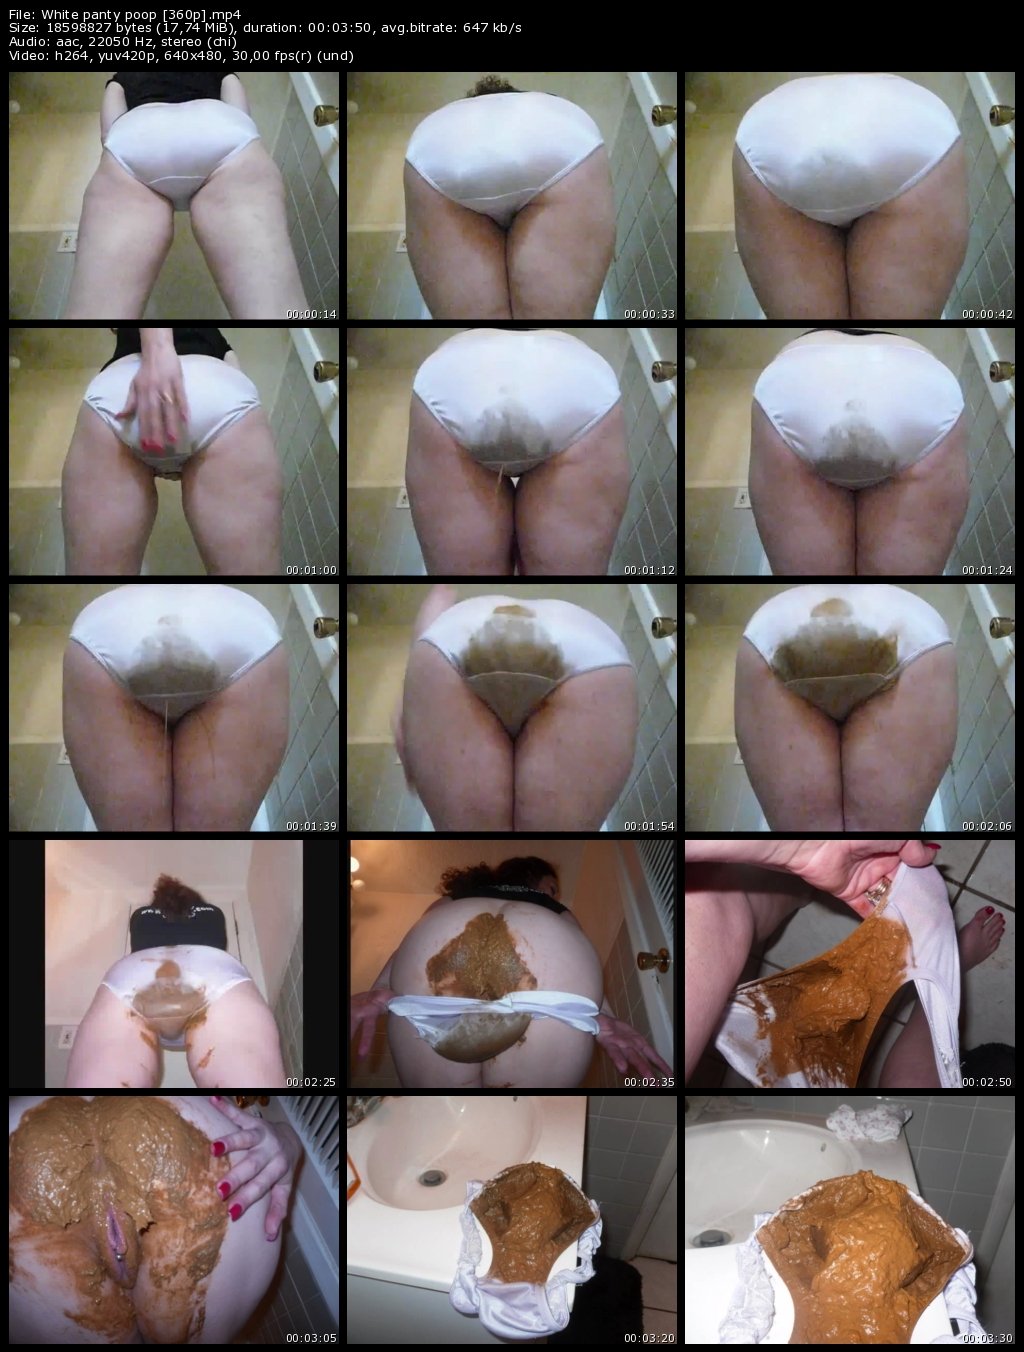 bhagyashree patwardhan recommends japanese mega panty poop pic